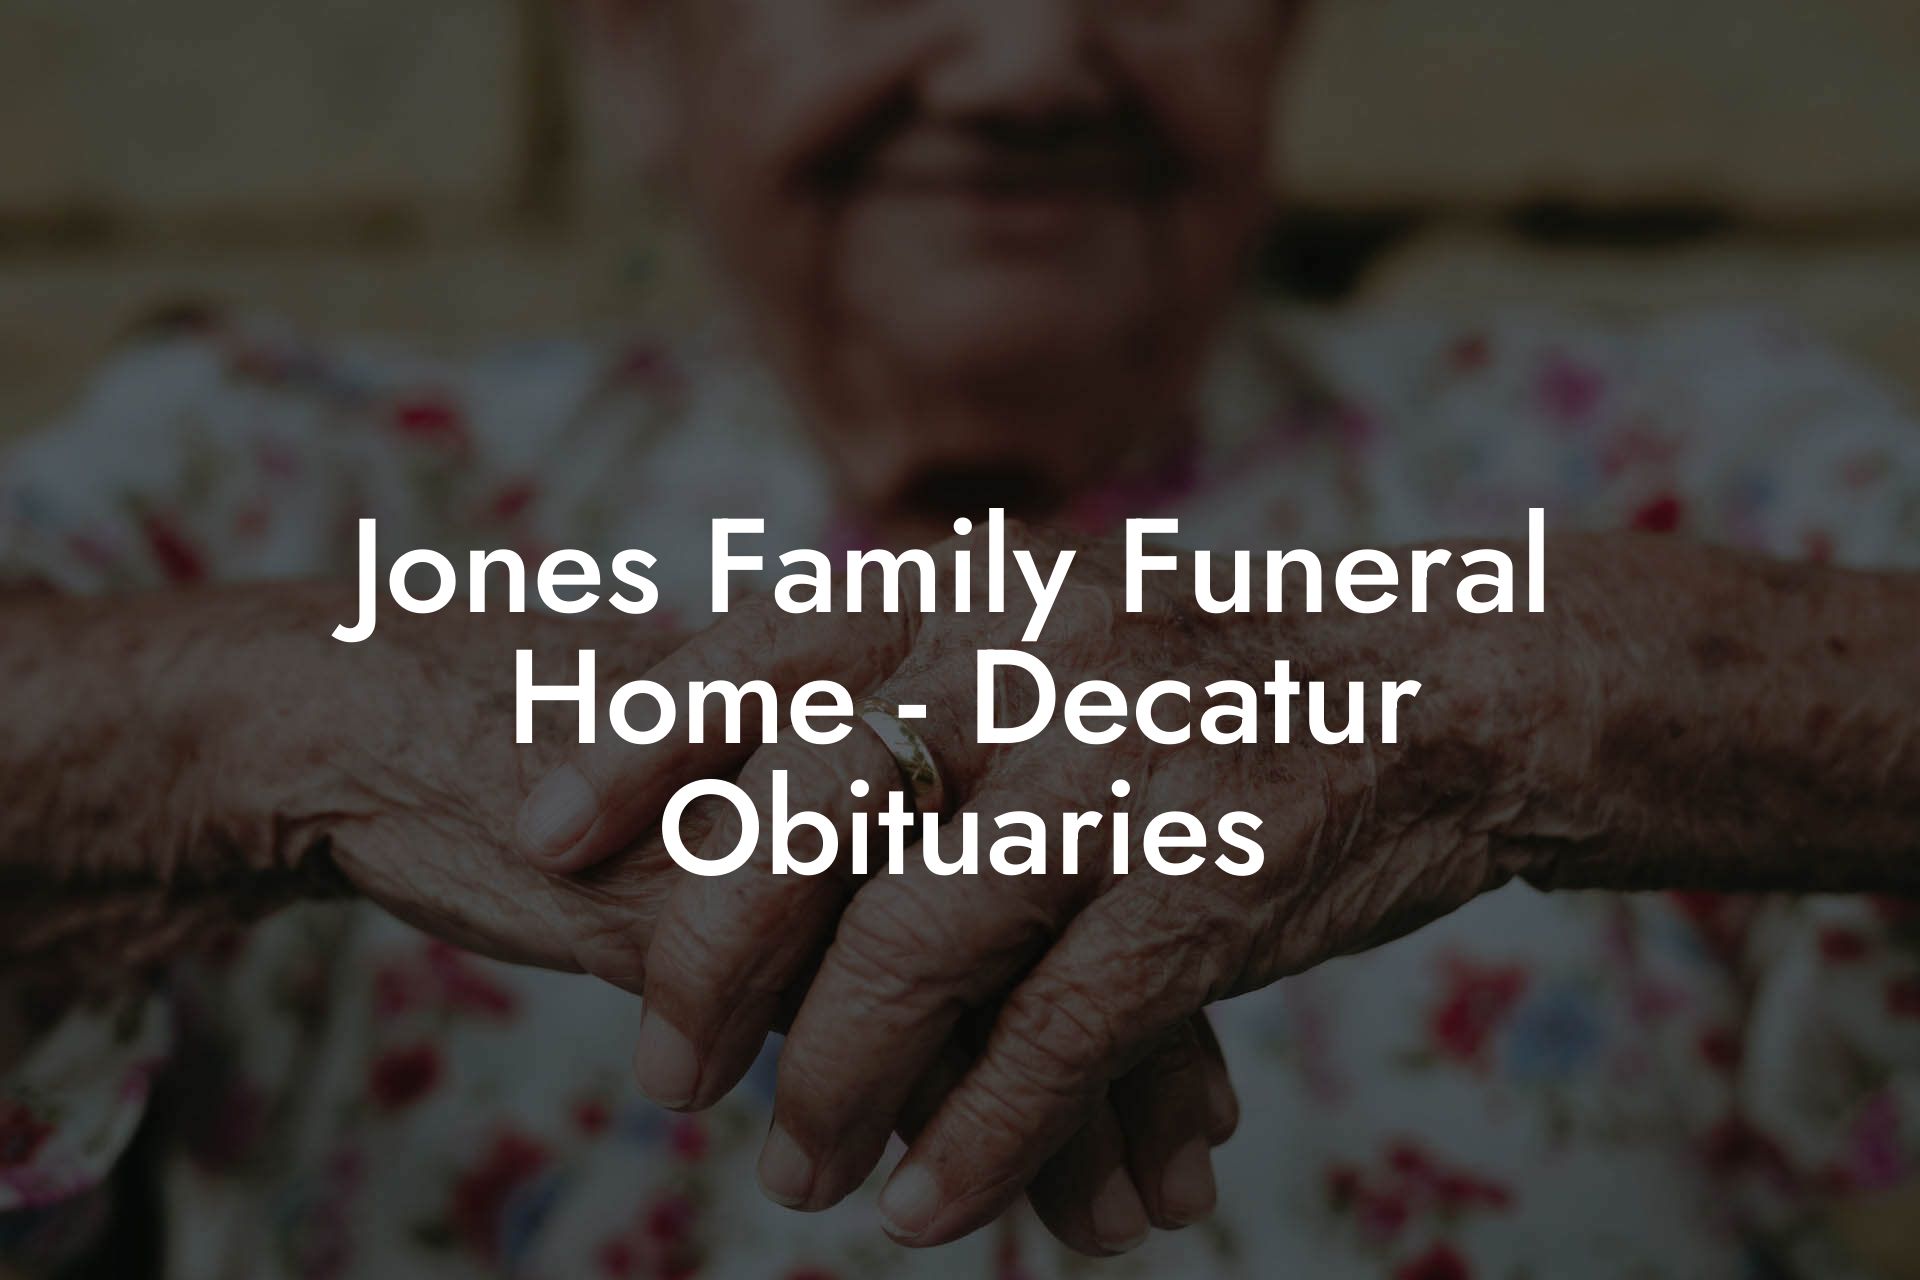 Jones Family Funeral Home - Decatur Obituaries